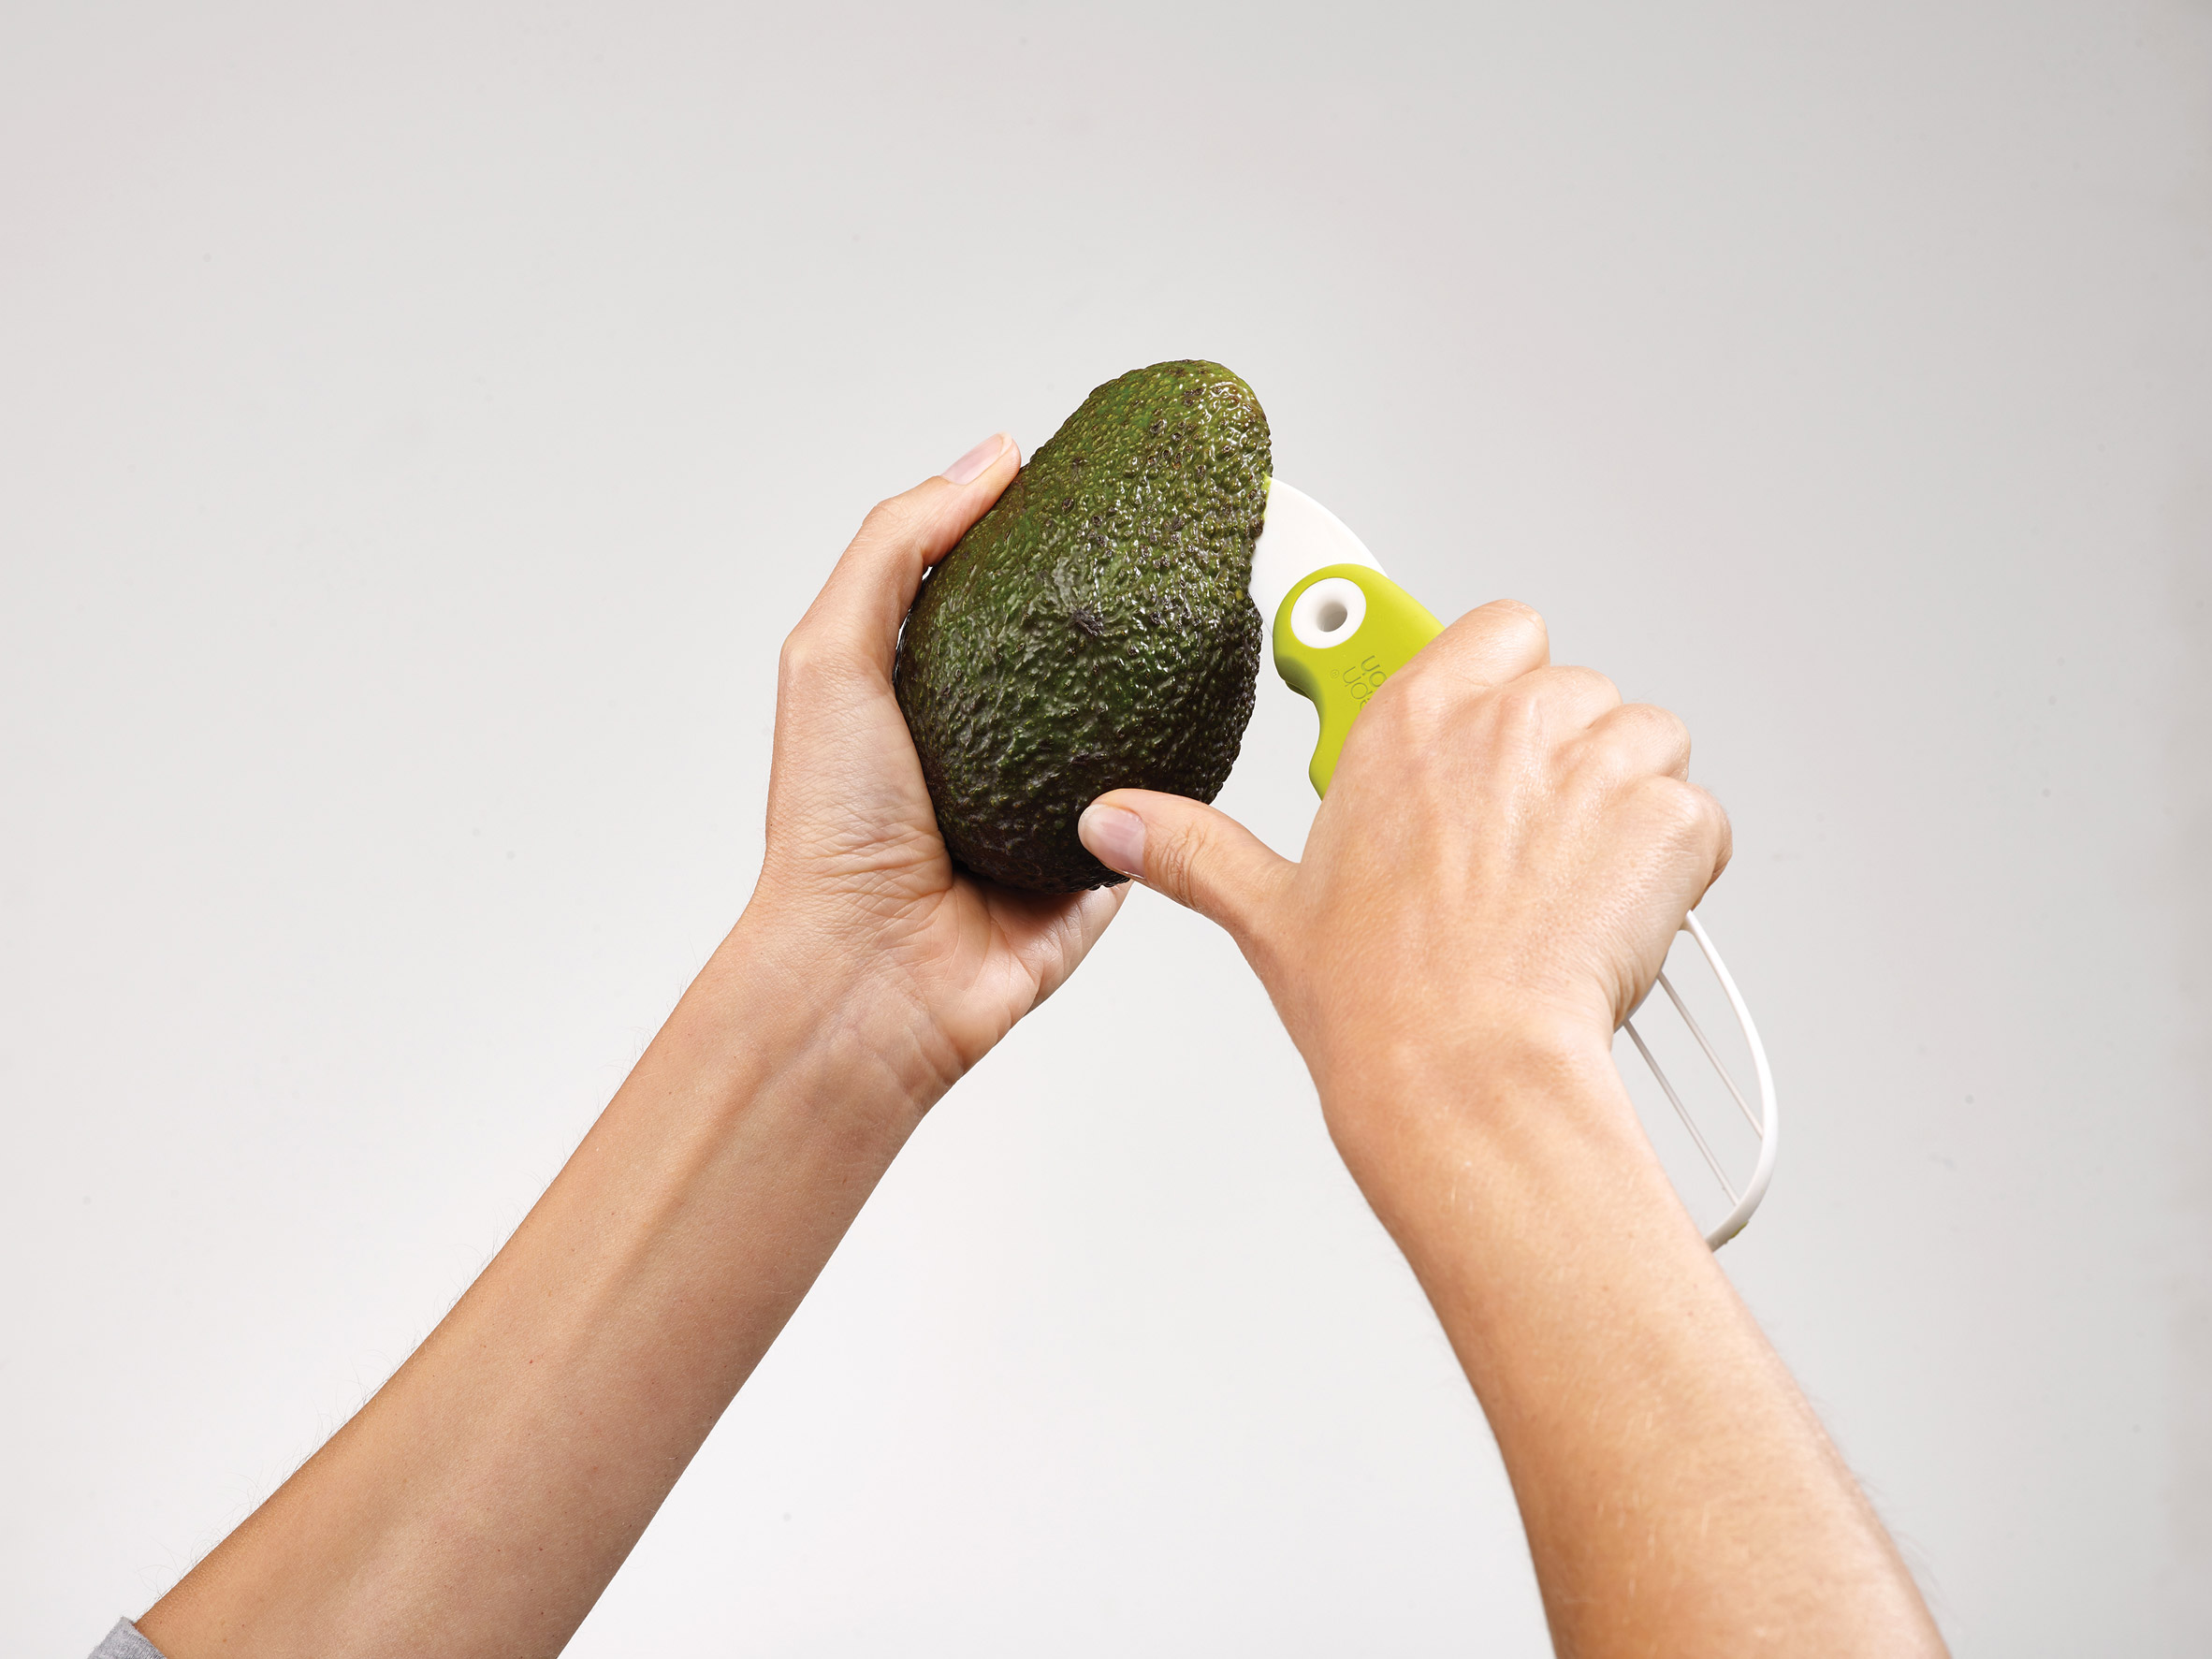 Joseph Joseph releases tool to help prevent "avocado hand" injuries